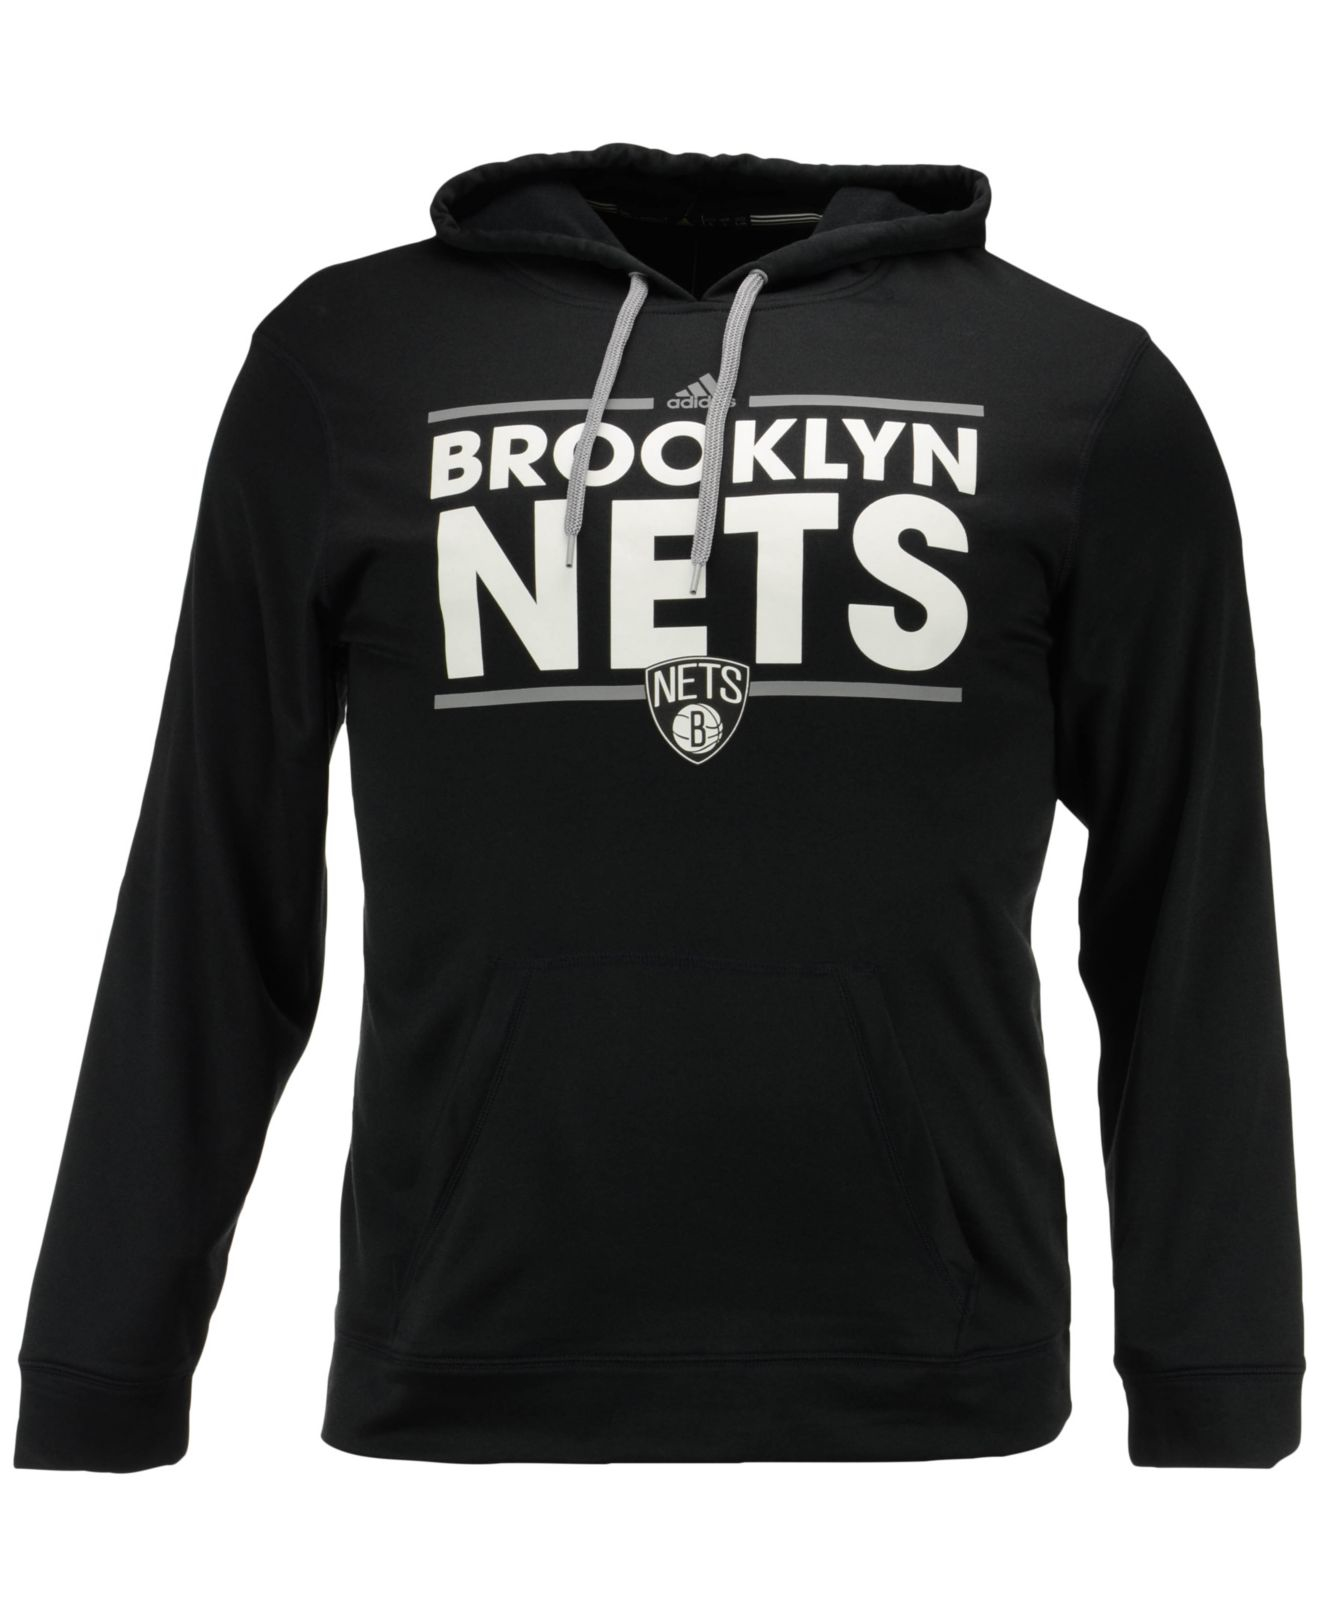 Lyst - Adidas Originals Men's Brooklyn Nets Dassler Hoodie in Black for Men